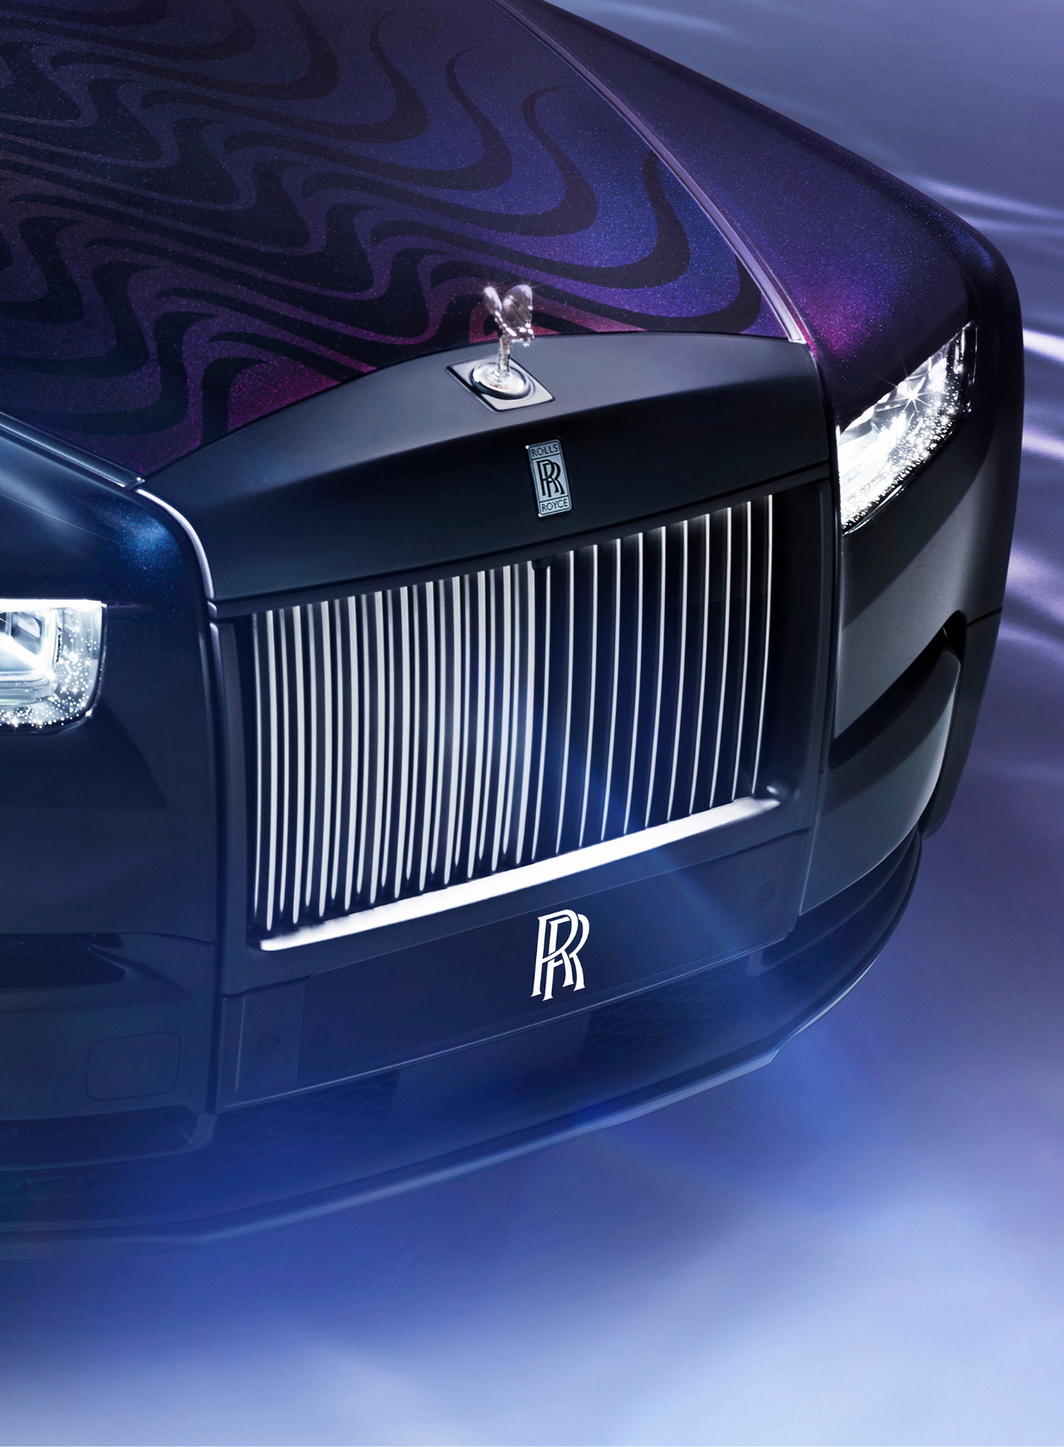 Rolls-Royce Motor Cars s'allie à une grande créatrice de mode.